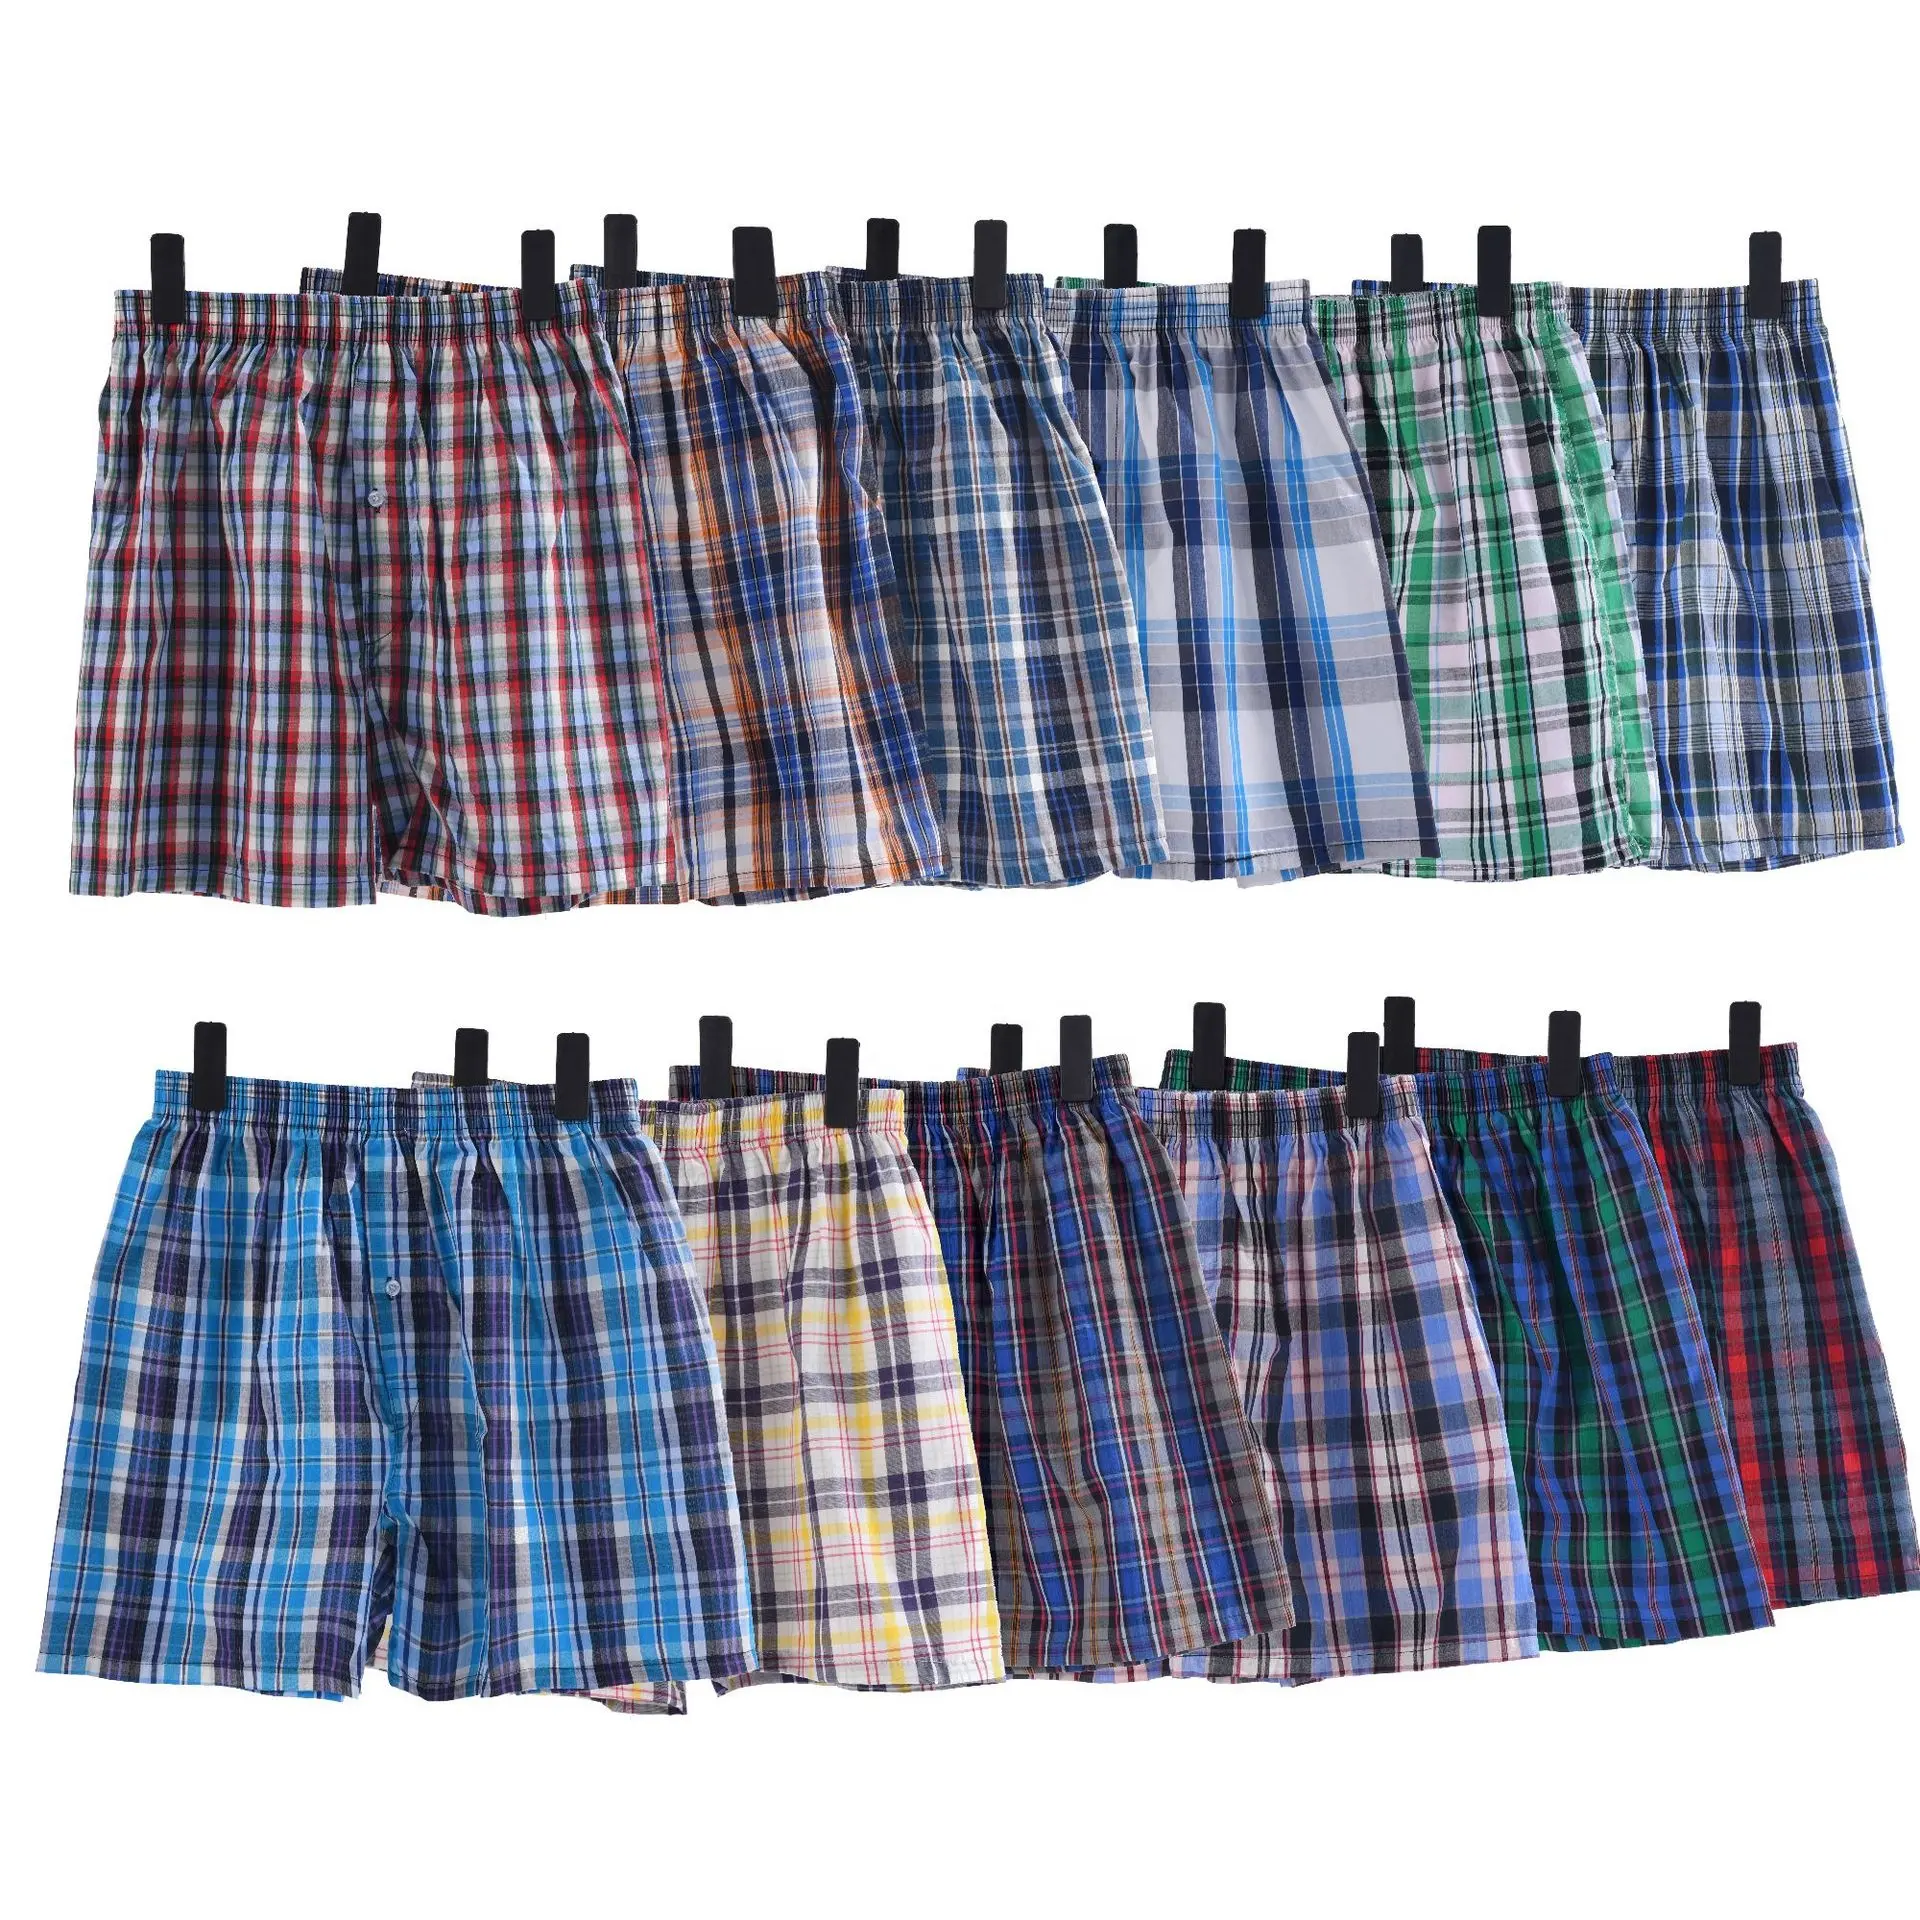 Wholesale In Stock Quality Men's Underwear Cotton Plaid Boxer Briefs Big Size Pajamas Home Wear Shorts